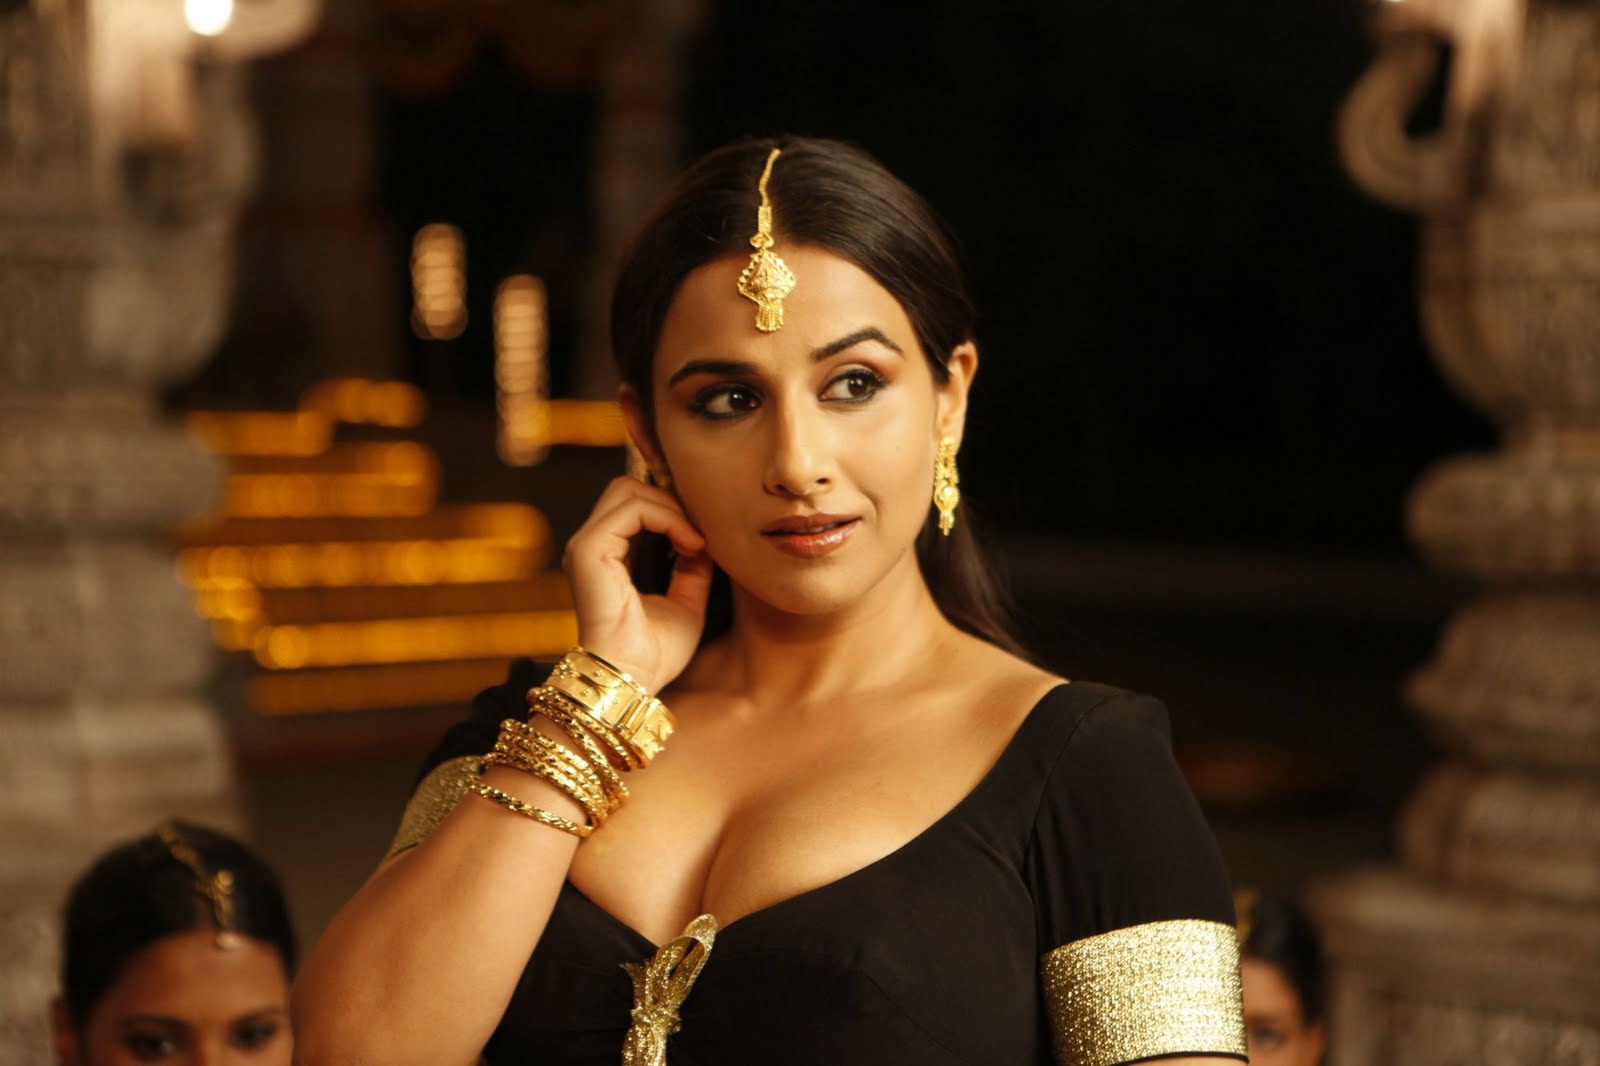 Hd Wallpaper Download Hottest Actress Vidya Balan Picture Image Photo Wallpaper